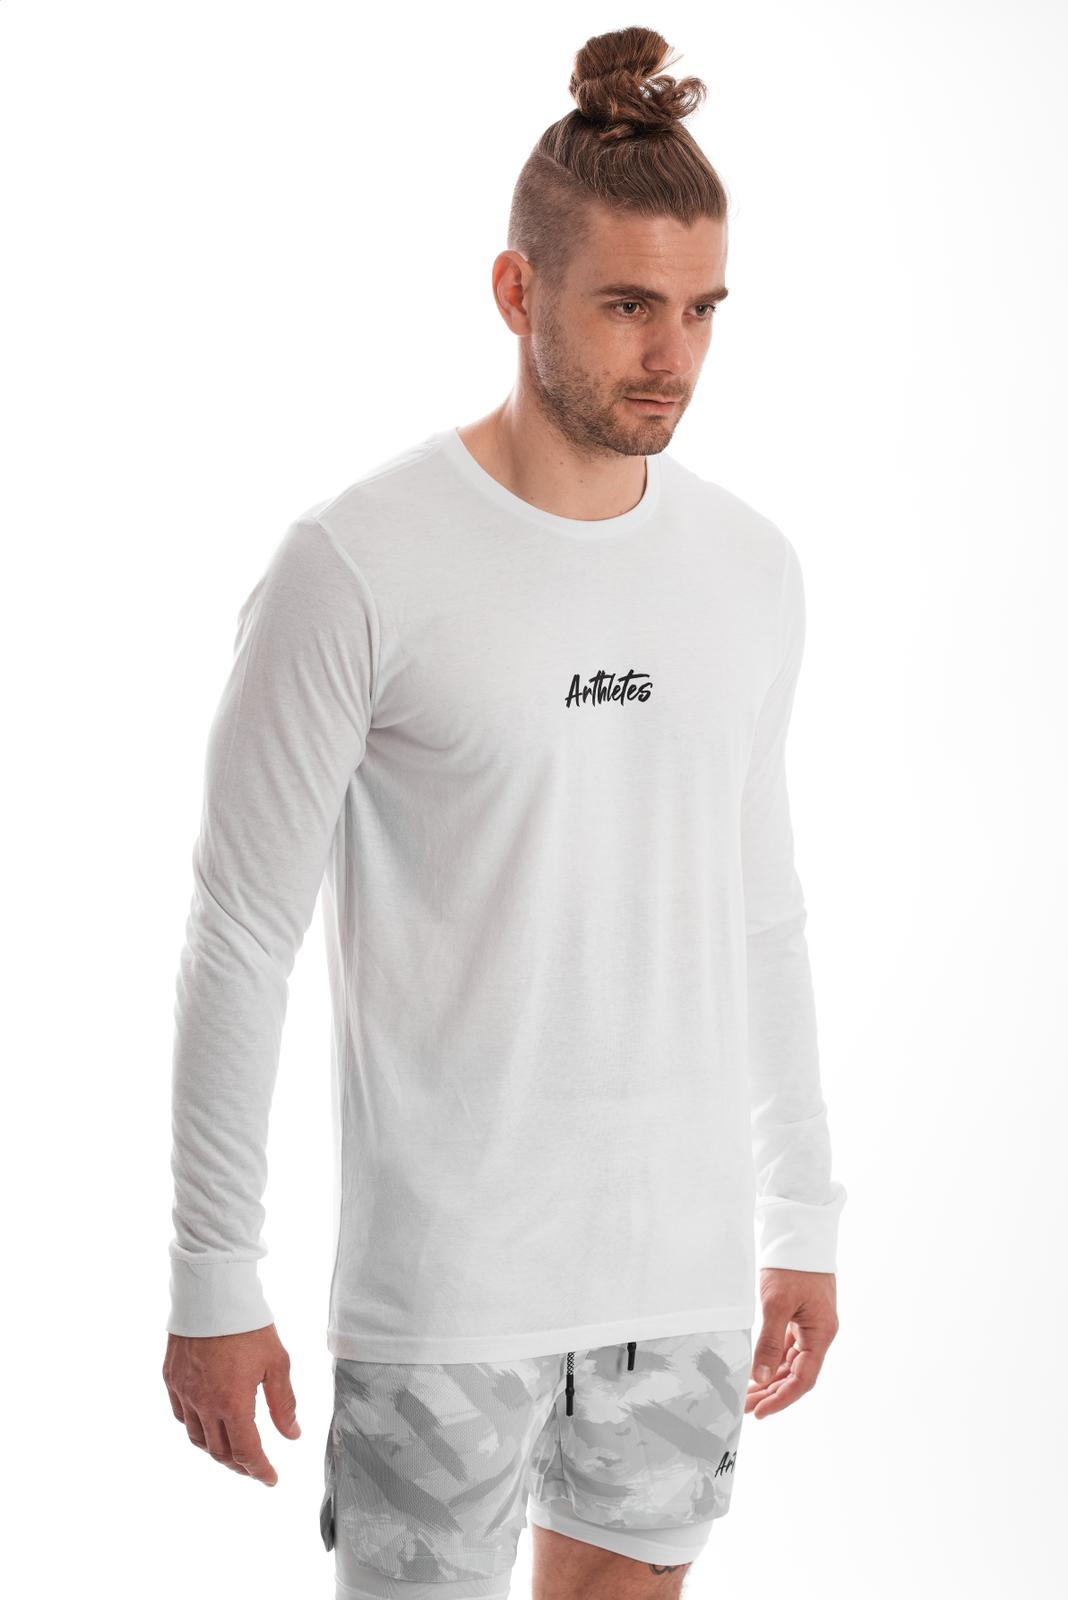 Arthletes long sleeves T-shirt- White